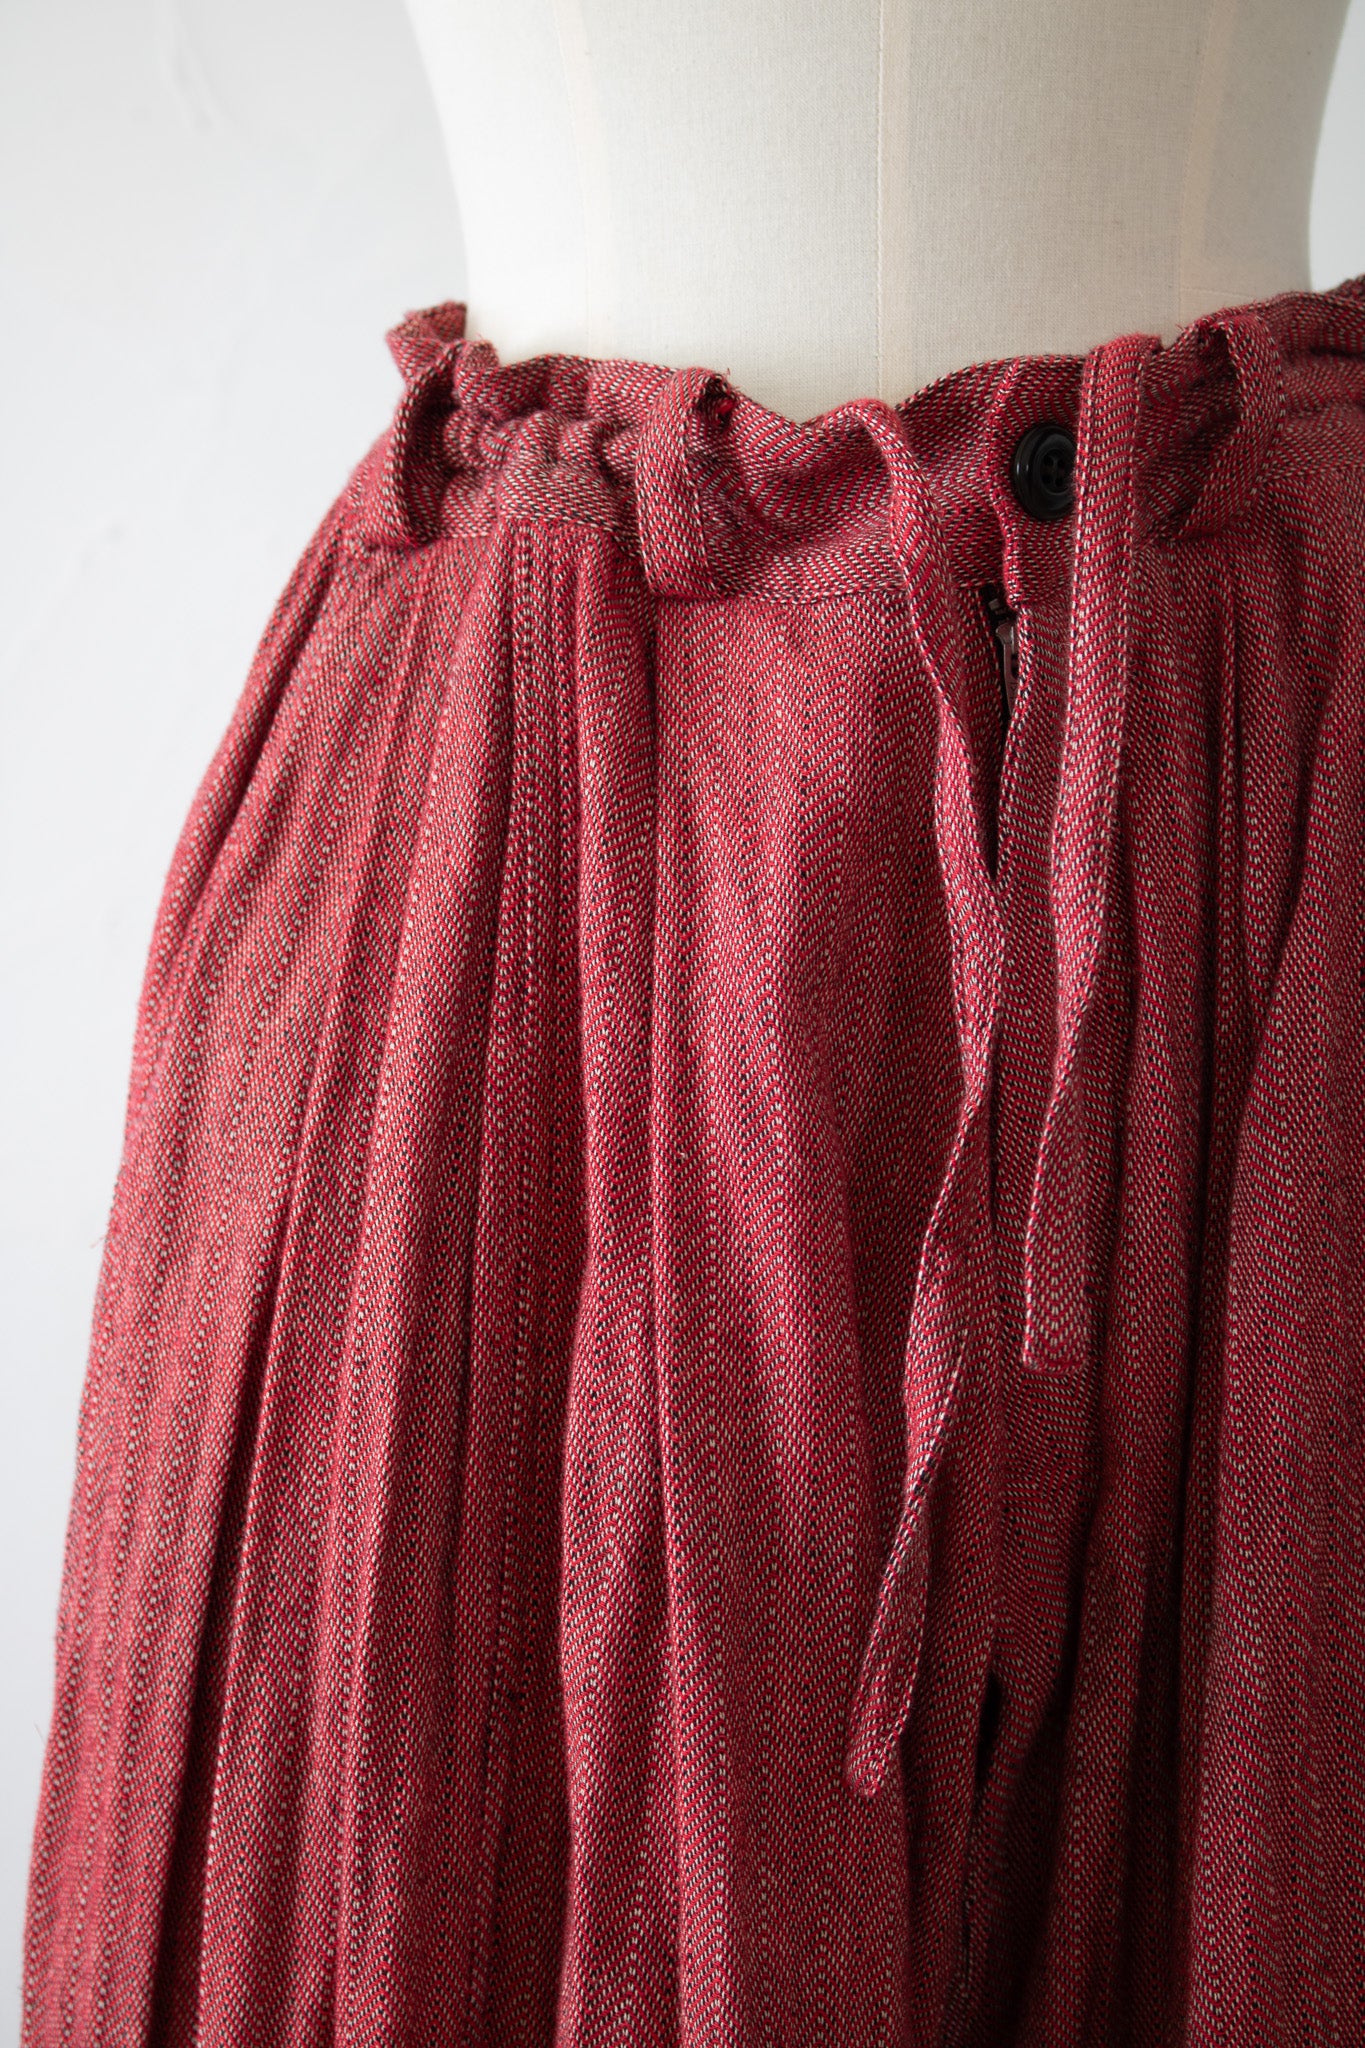 hakama pants K700 cotton herringbone red/beige